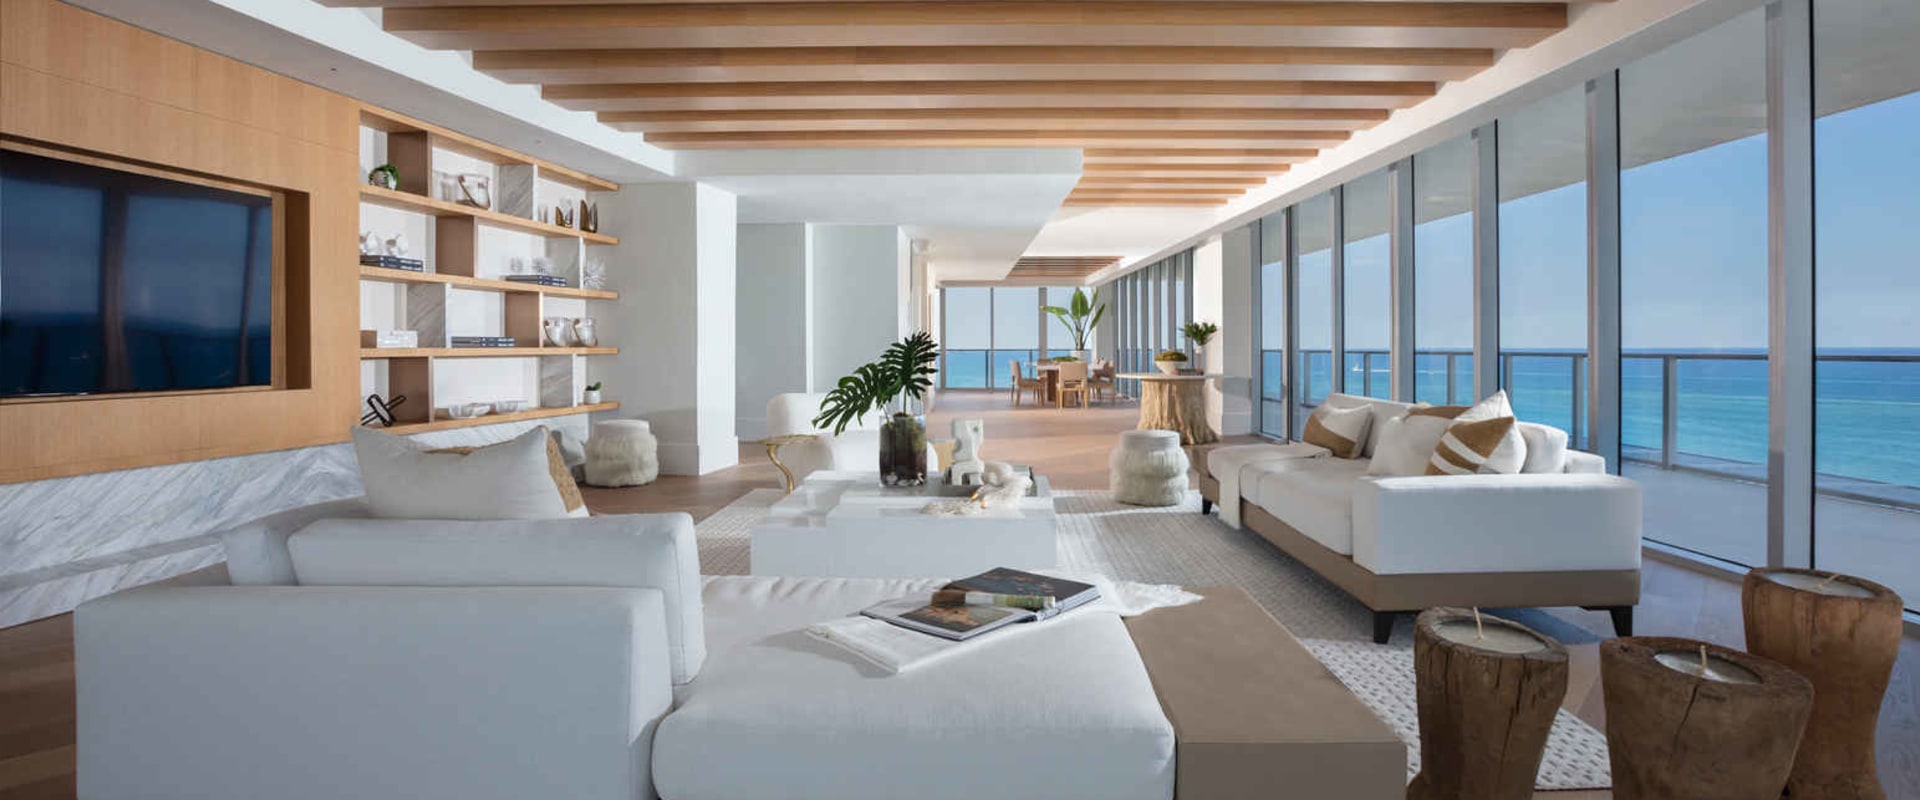 Penthouses in Fort Lauderdale, FL: Luxury Living with Ocean Views